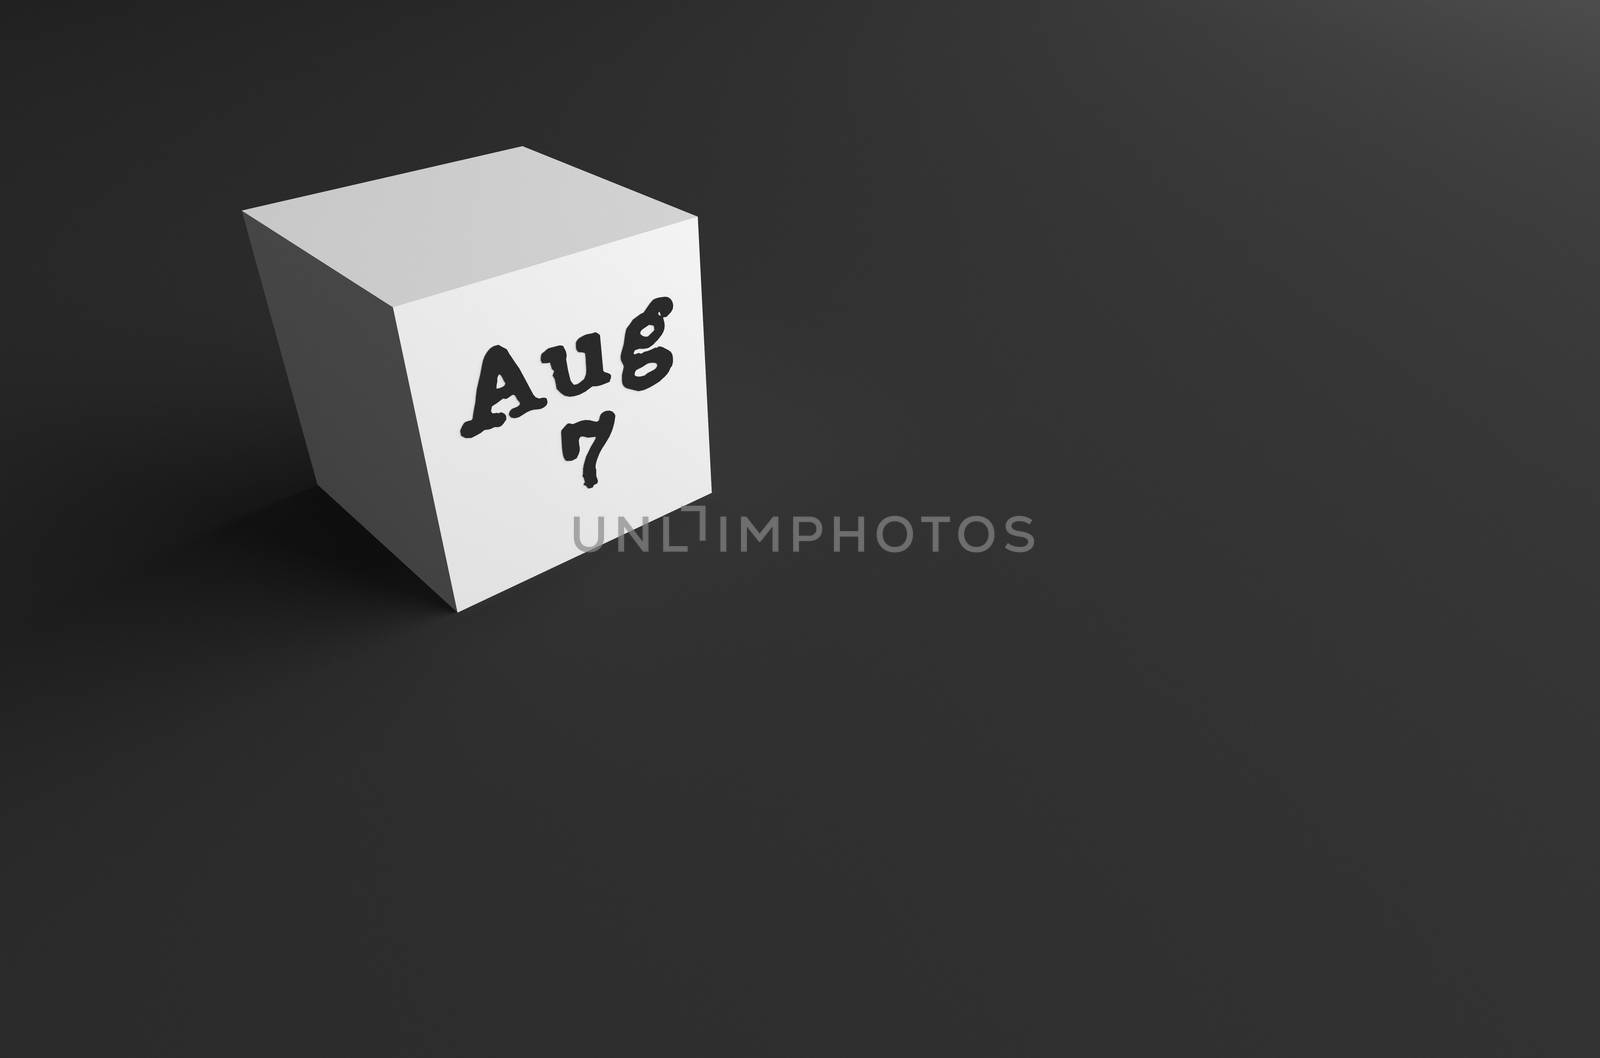 3D RENDERING OF Aug 7 by PrettyTG